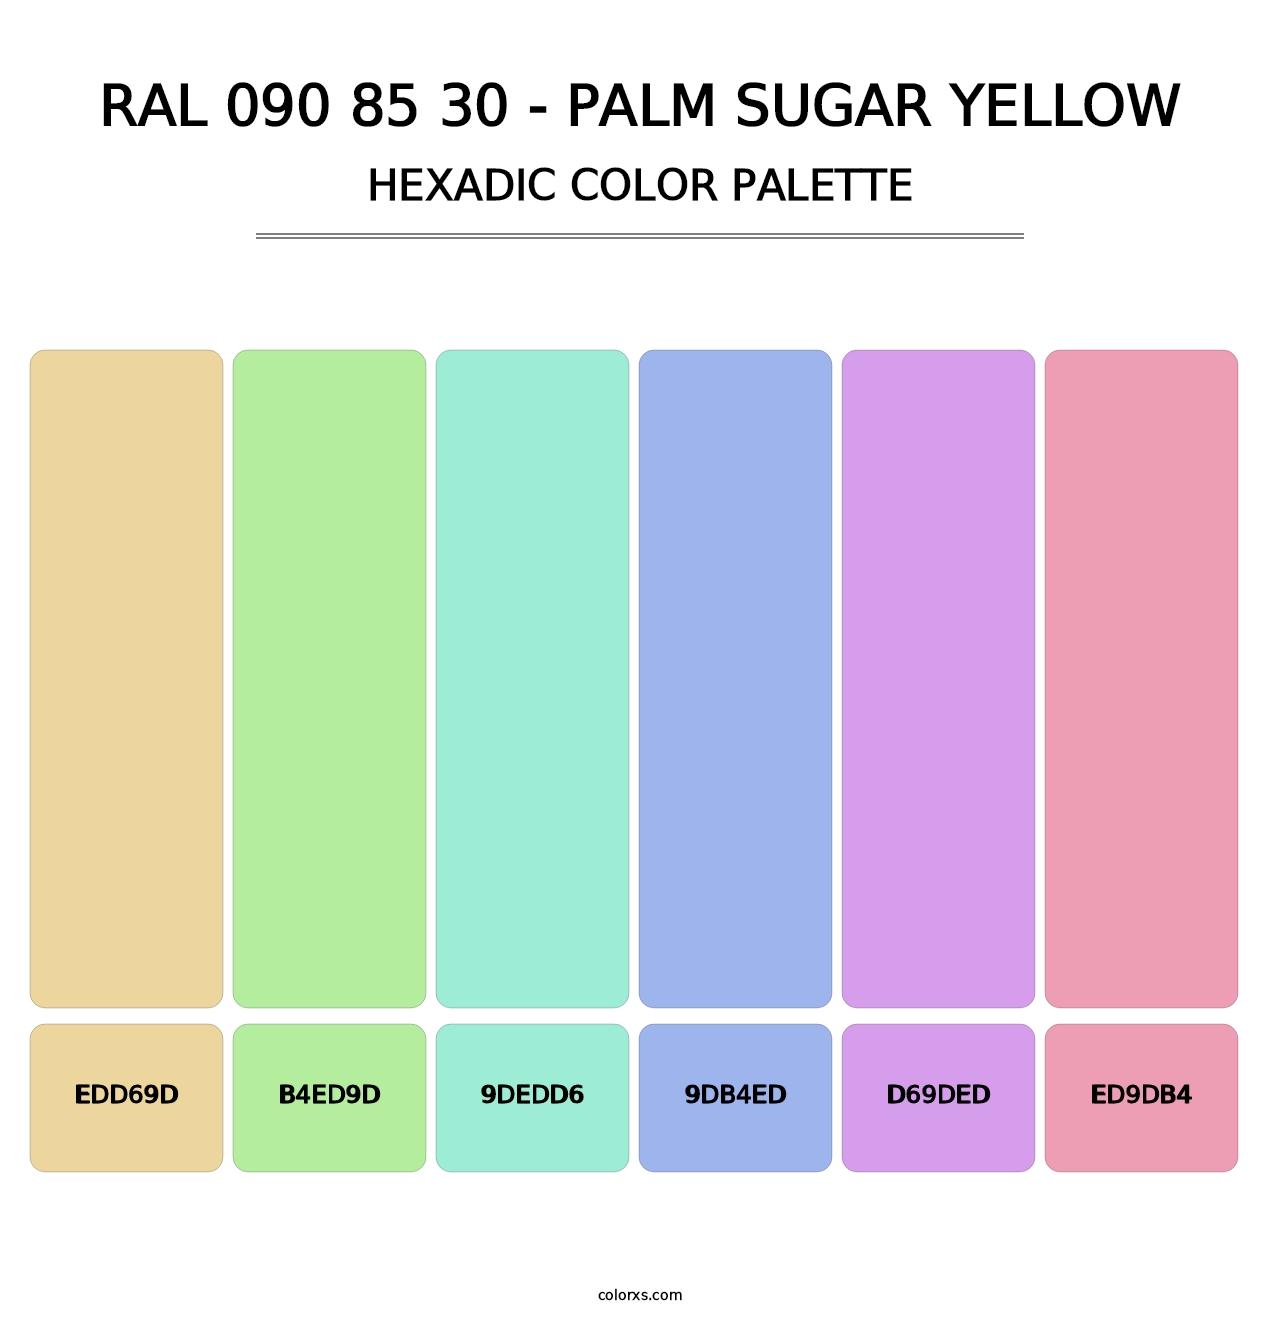 RAL 090 85 30 - Palm Sugar Yellow - Hexadic Color Palette